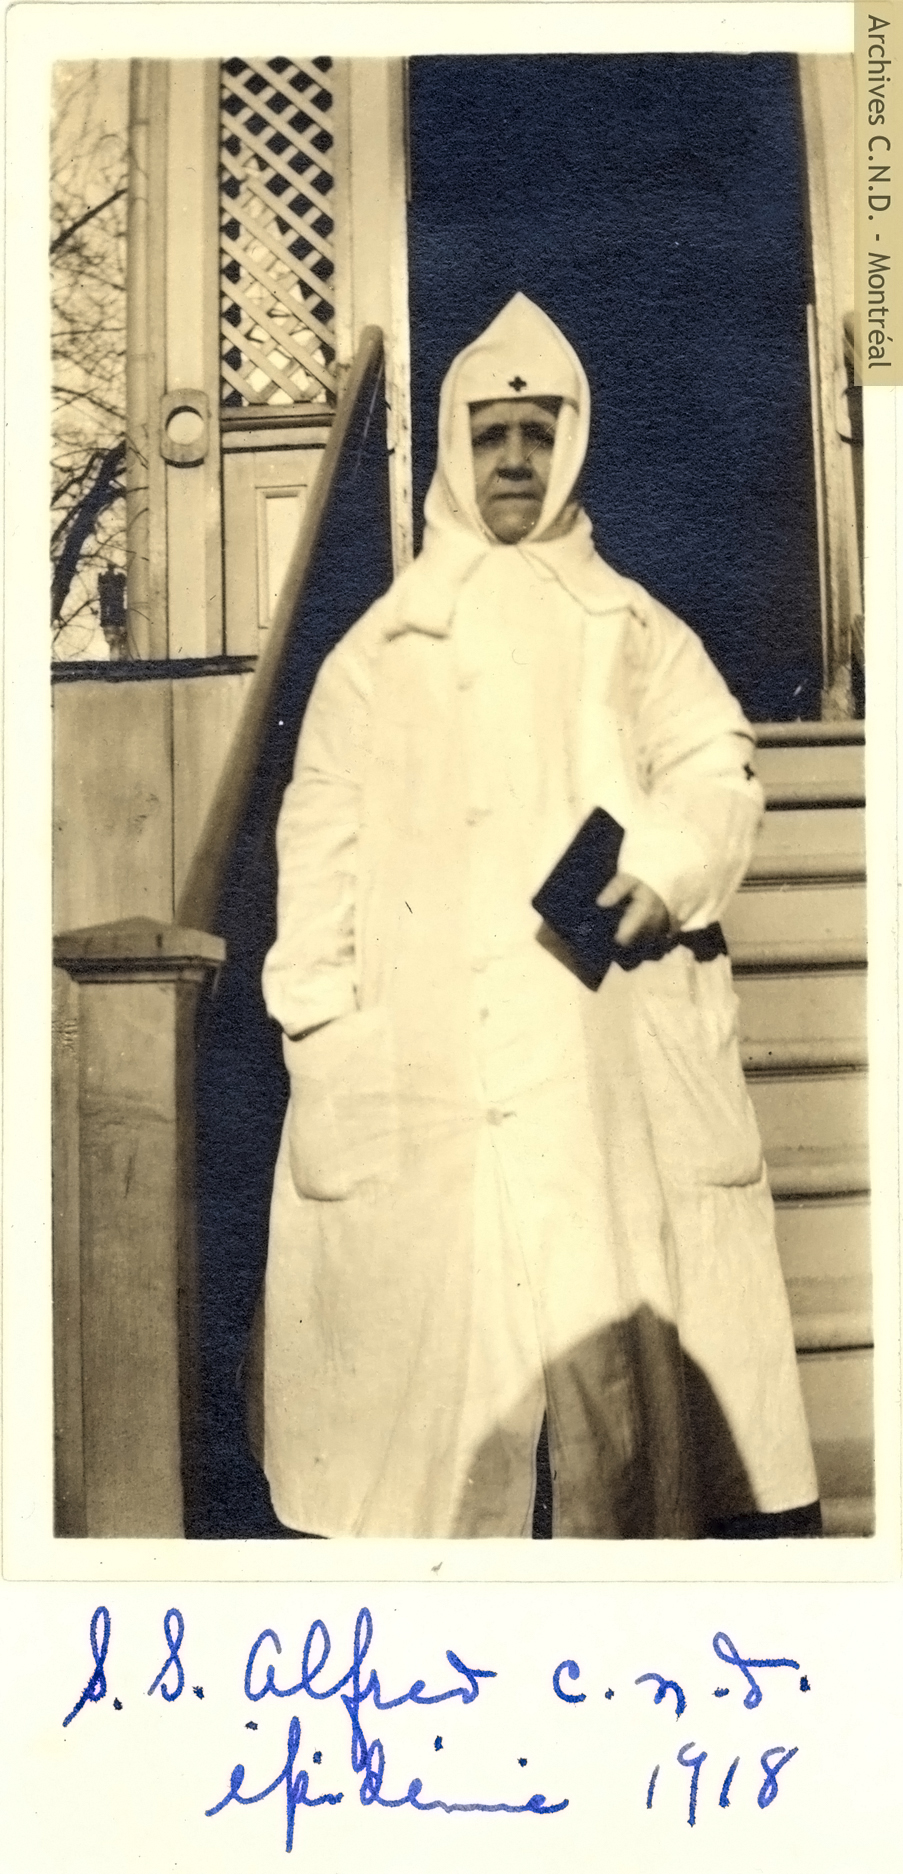 Sister Saint-Alfred (Délia Clément) during the Spanish Flu pandemic